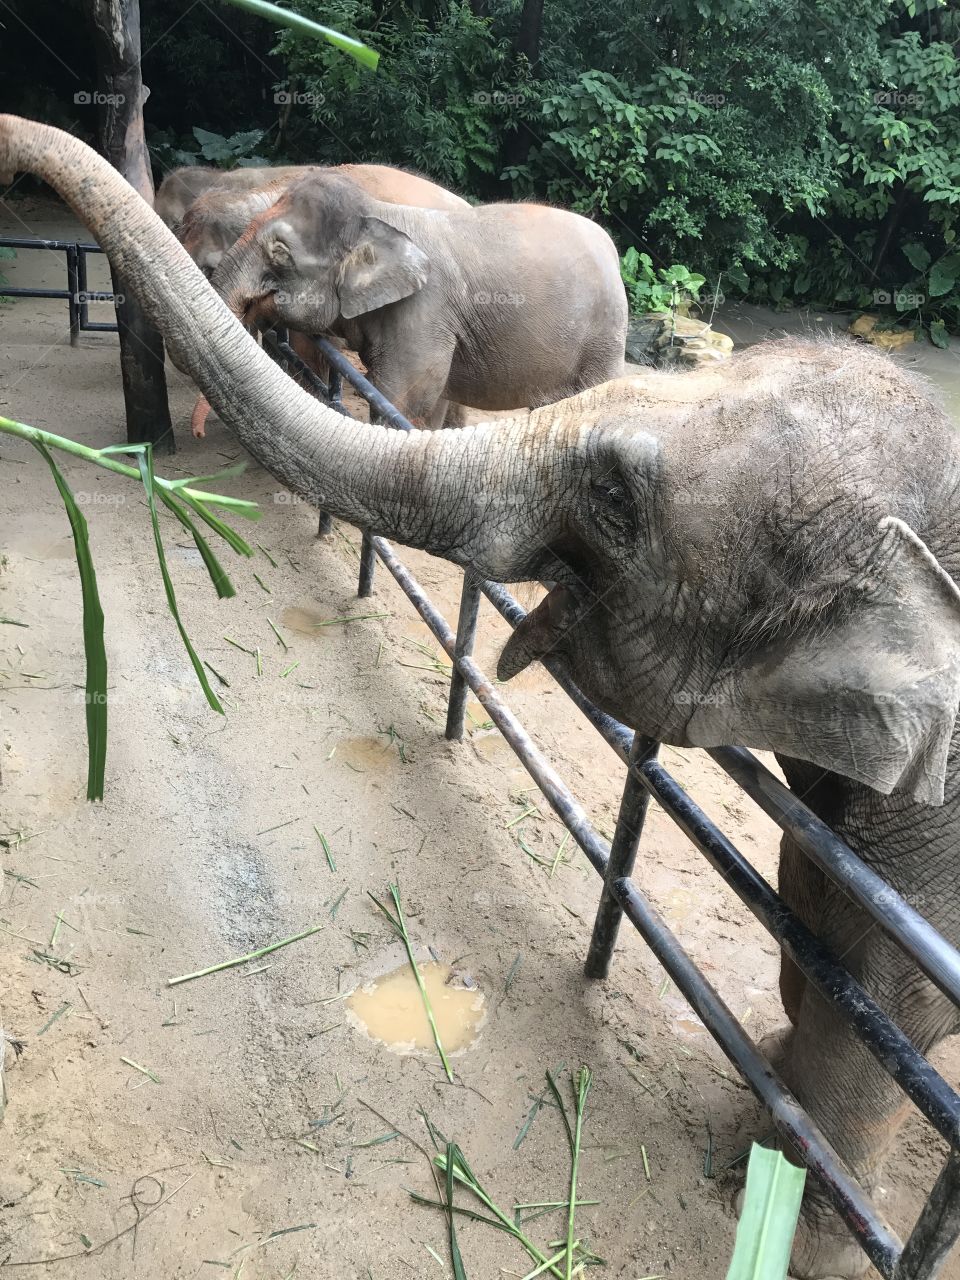 Elephant at Chimelong safari park